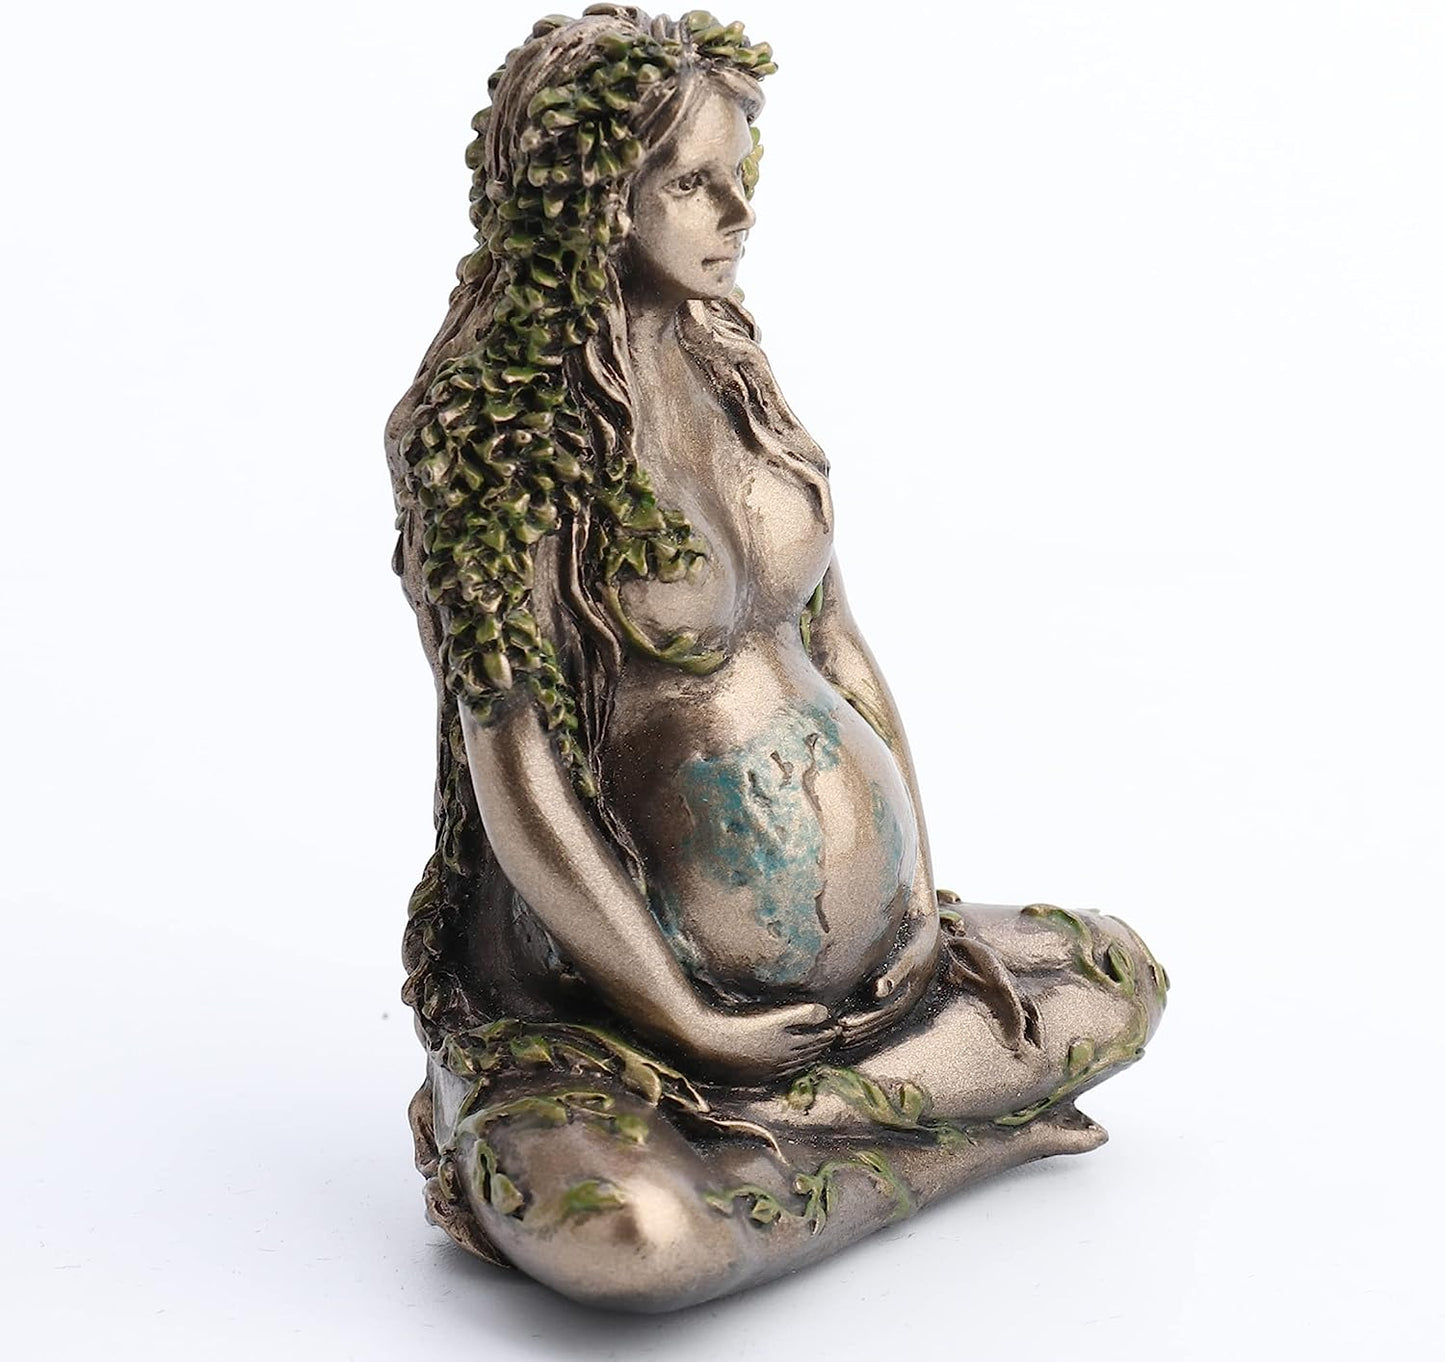 Mother Earth Gaia Sitting Lotus Pose